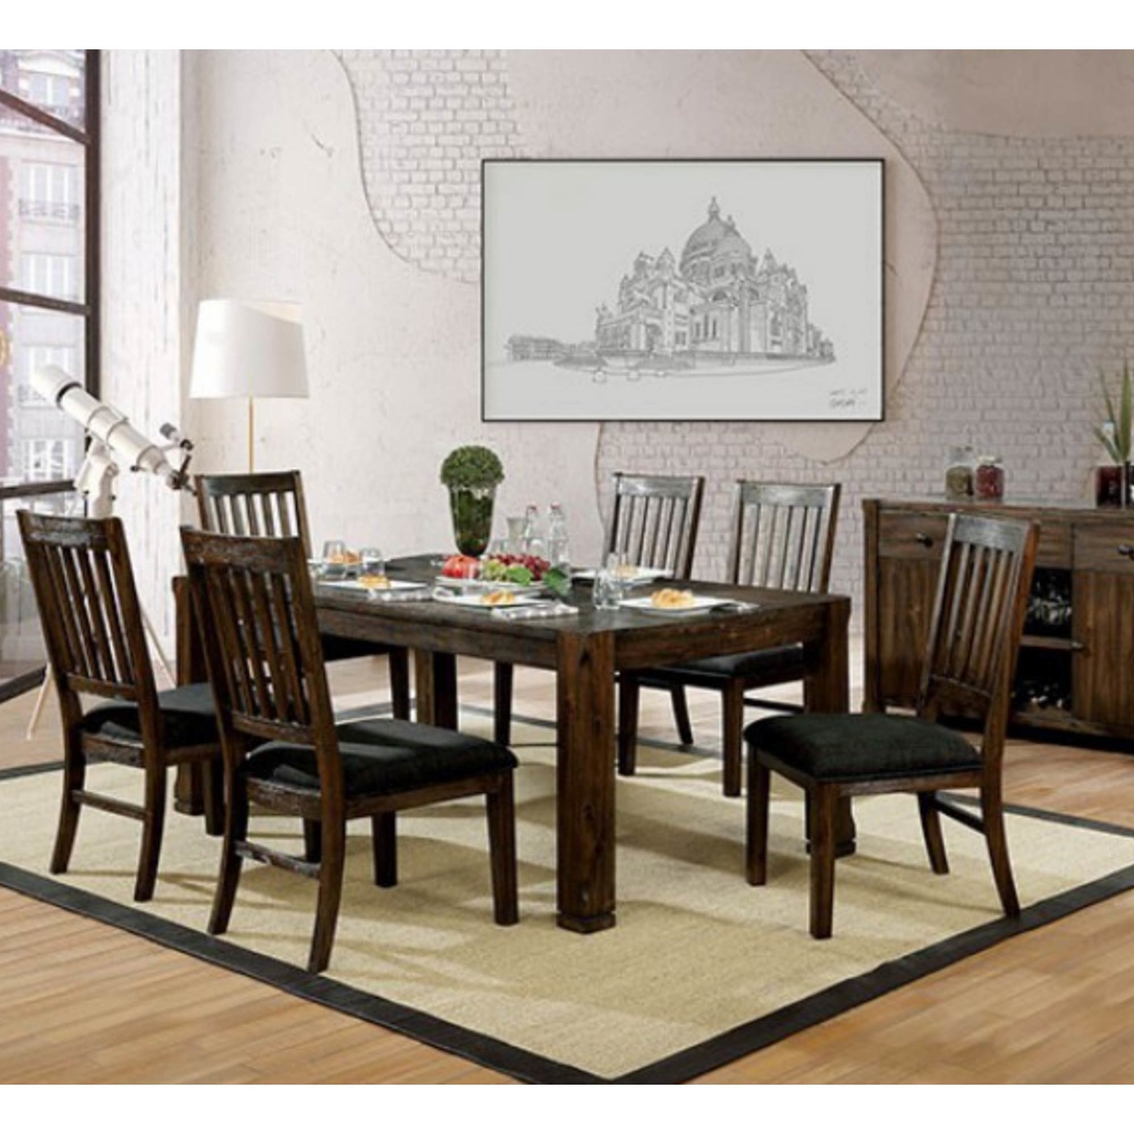 Furniture of America Scranton Side Chair - Image 2 of 2